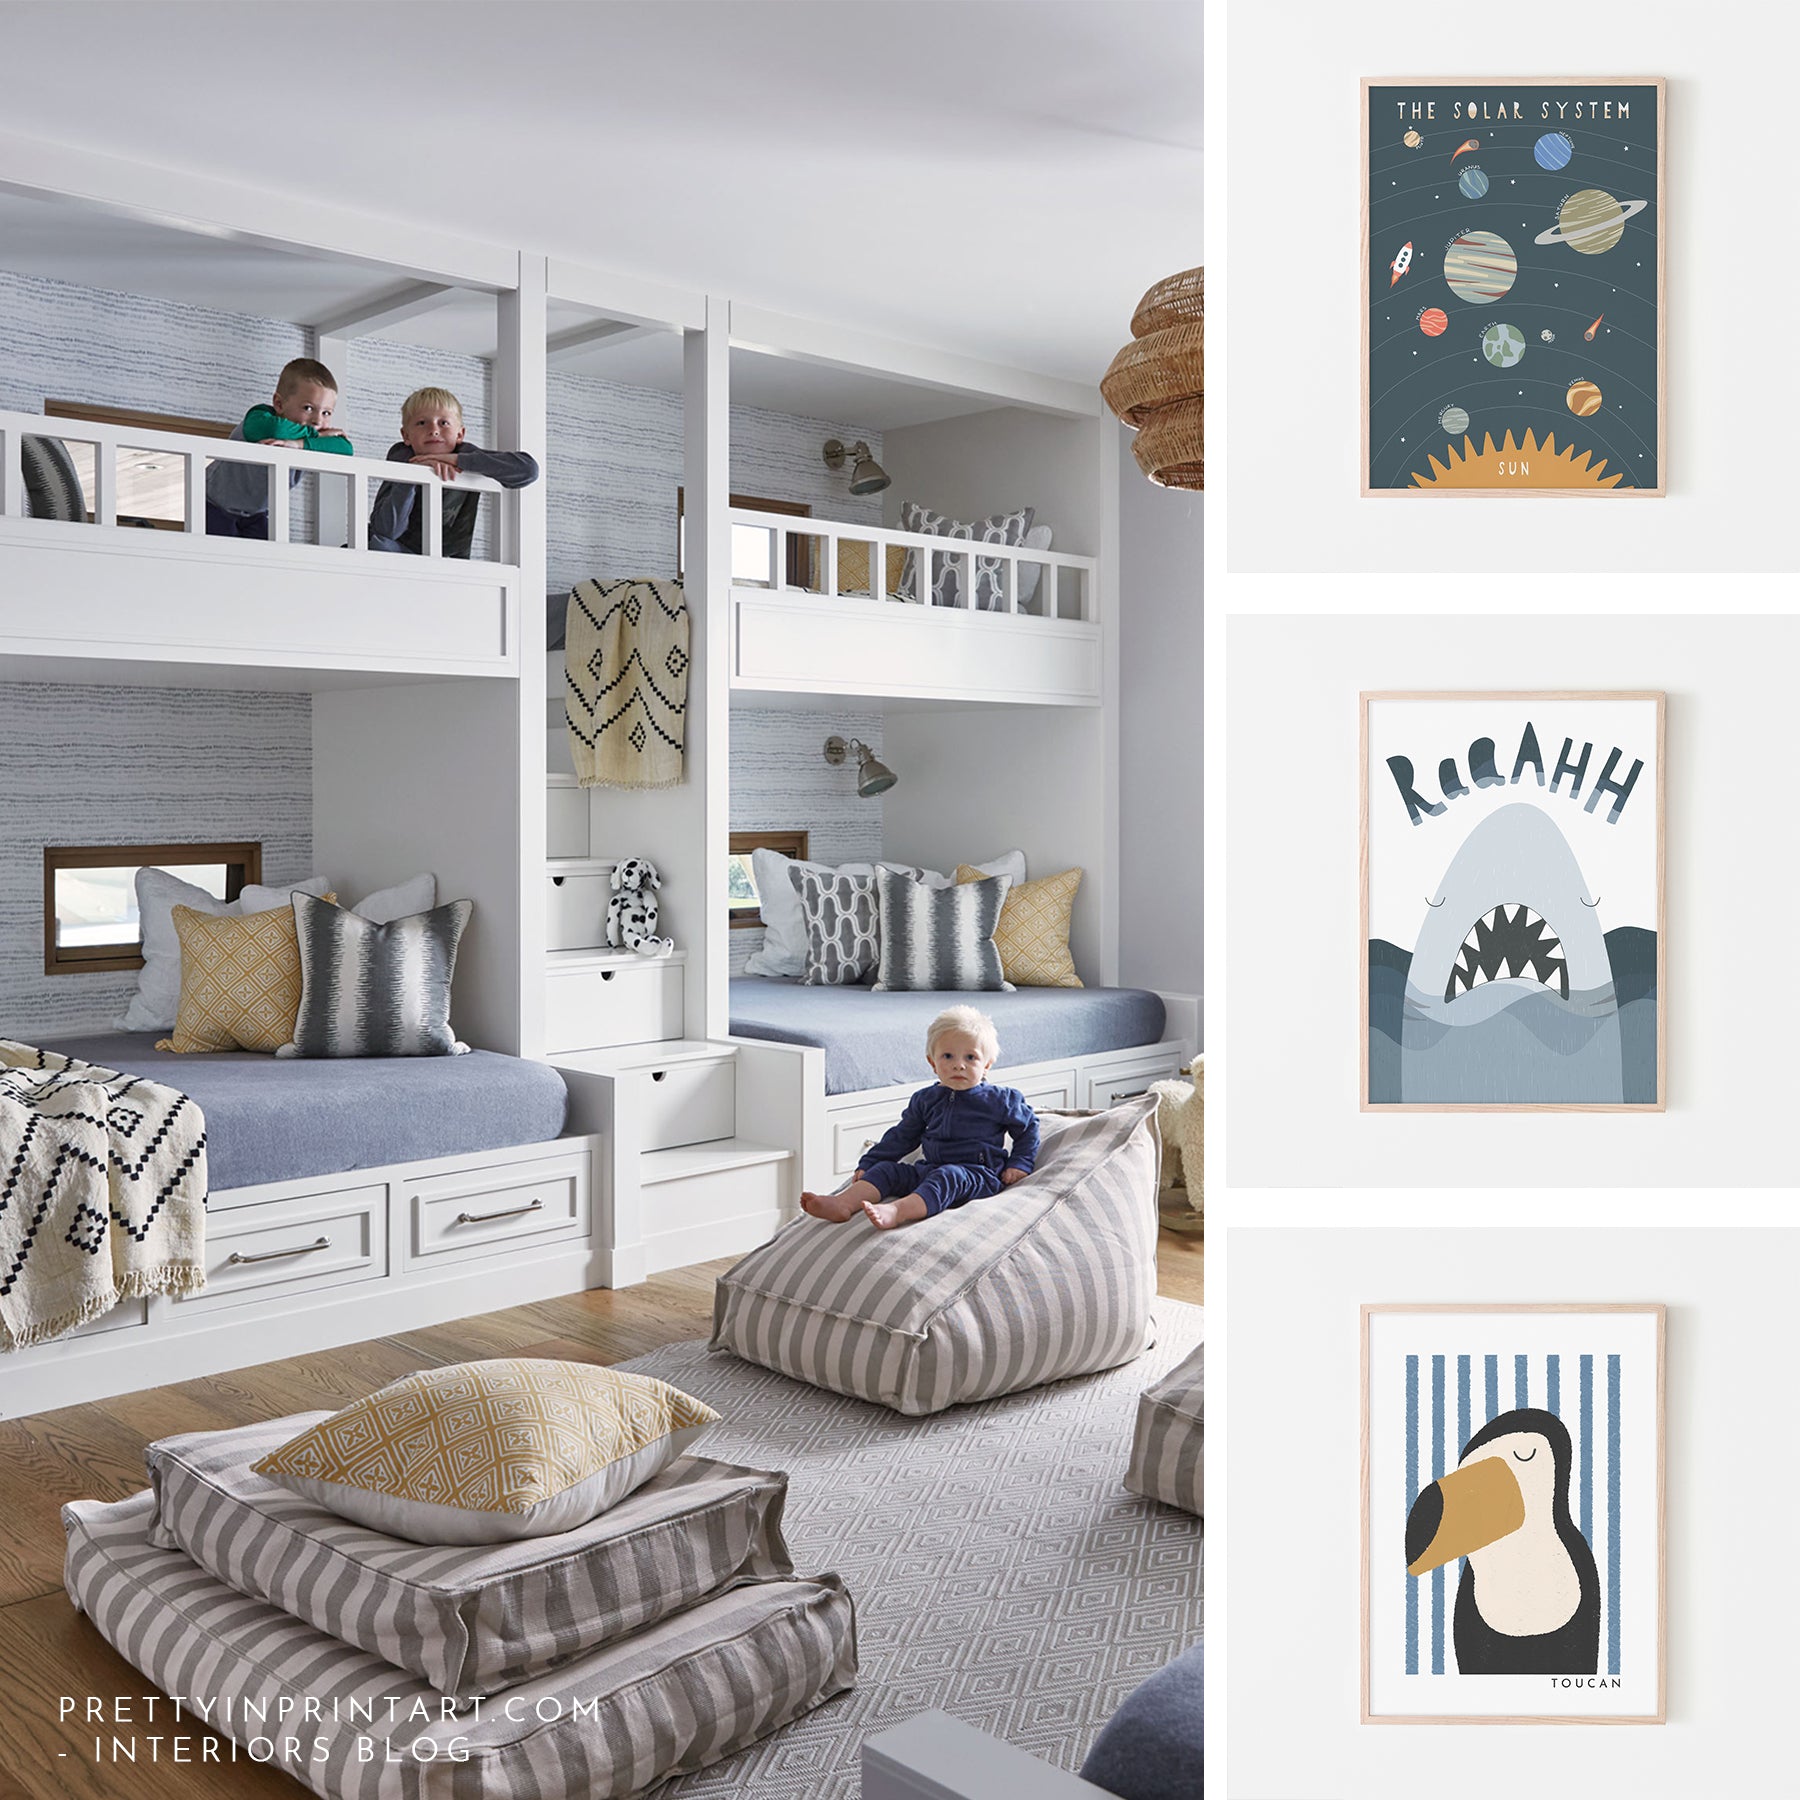 Amazing DIY Bed Ideas – Pretty in Print Art Ltd